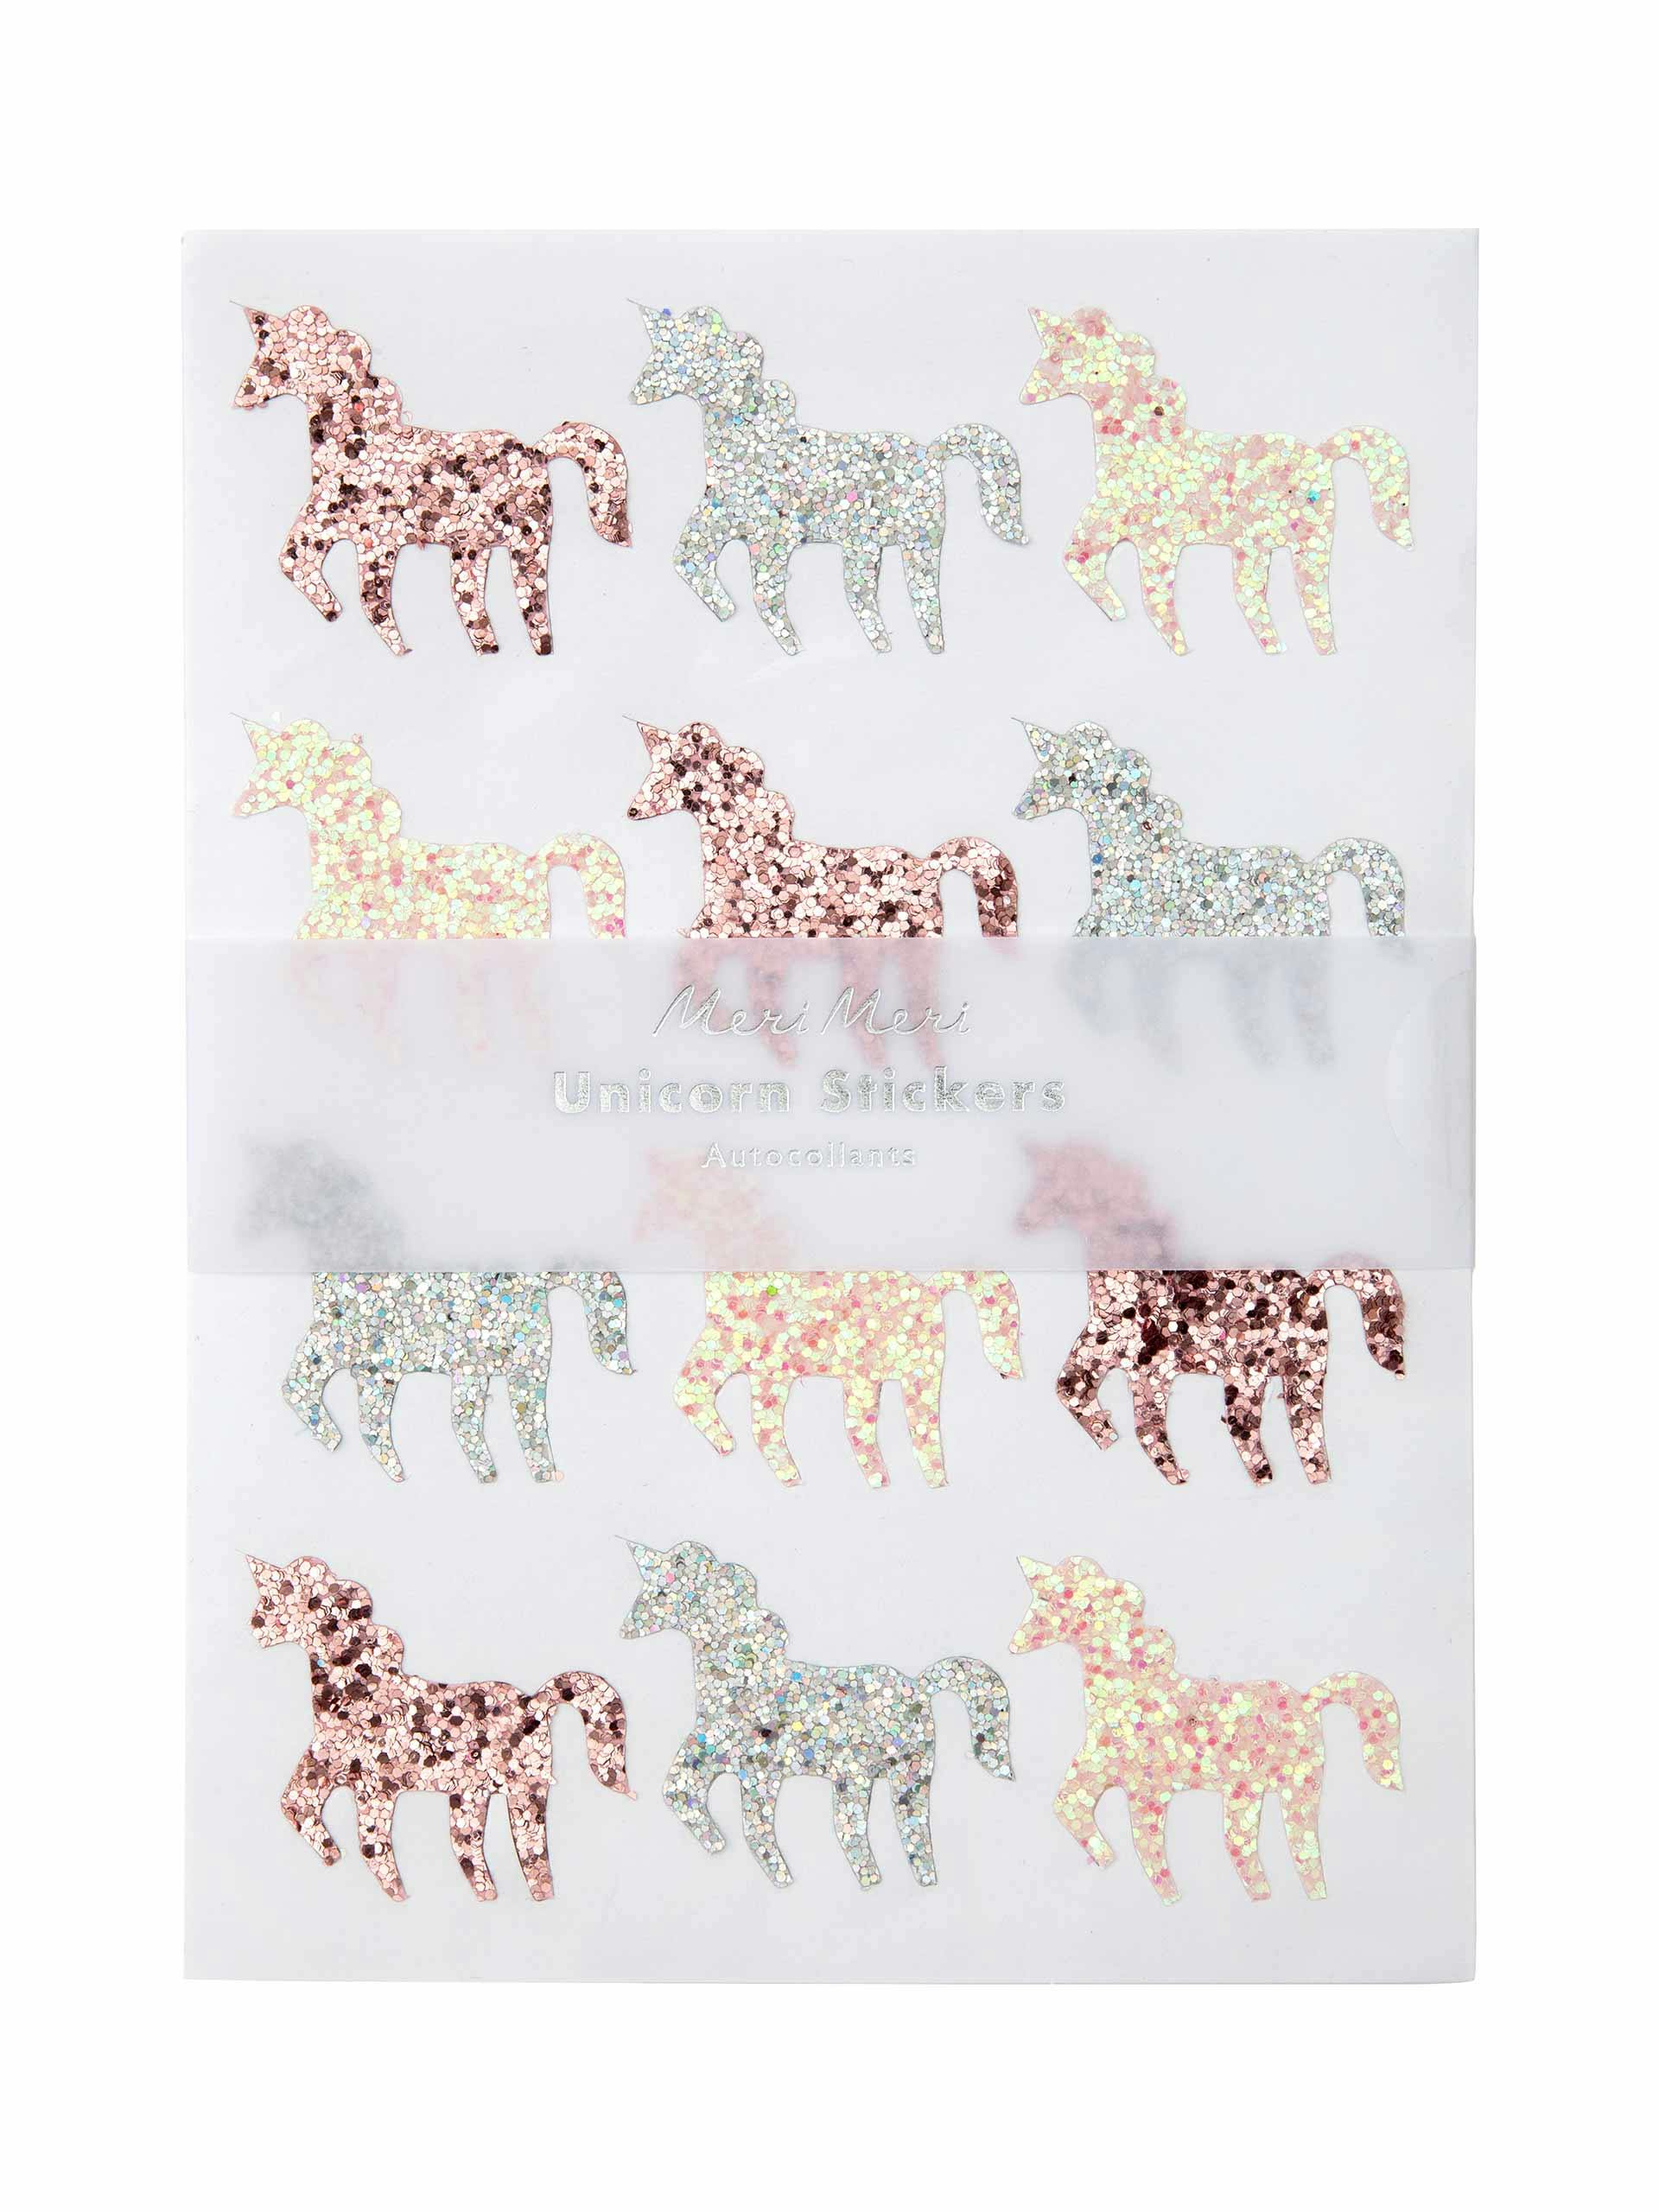 Glitter unicorn stickers